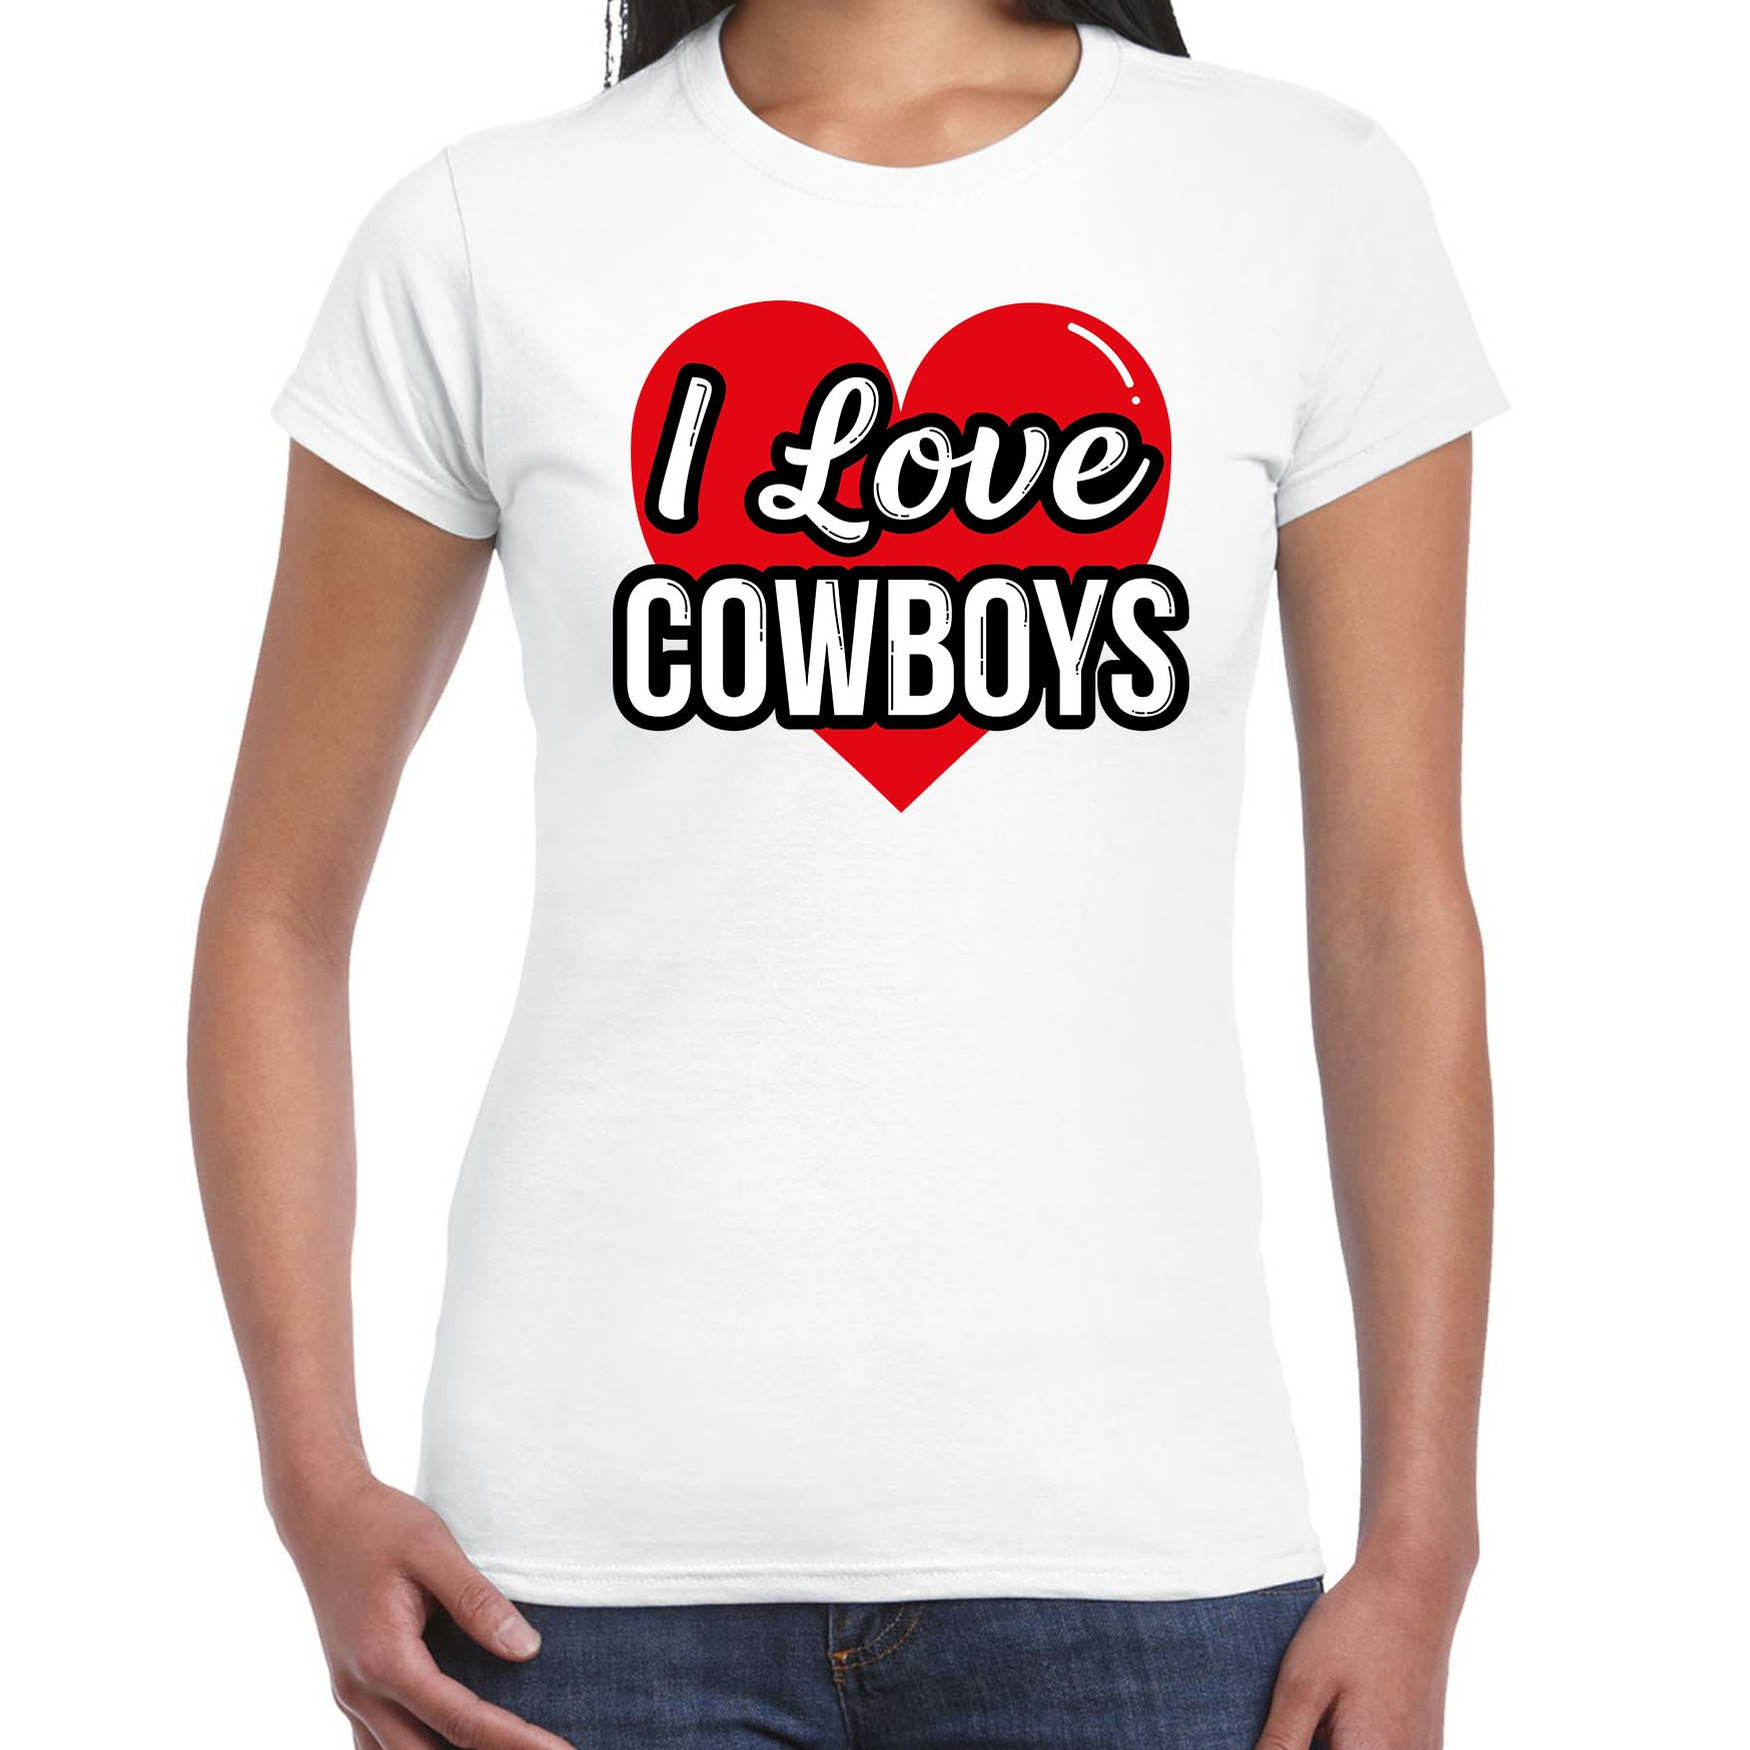 I love Cowboys verkleed t-shirt wit voor dames Outfit western verkleed feest